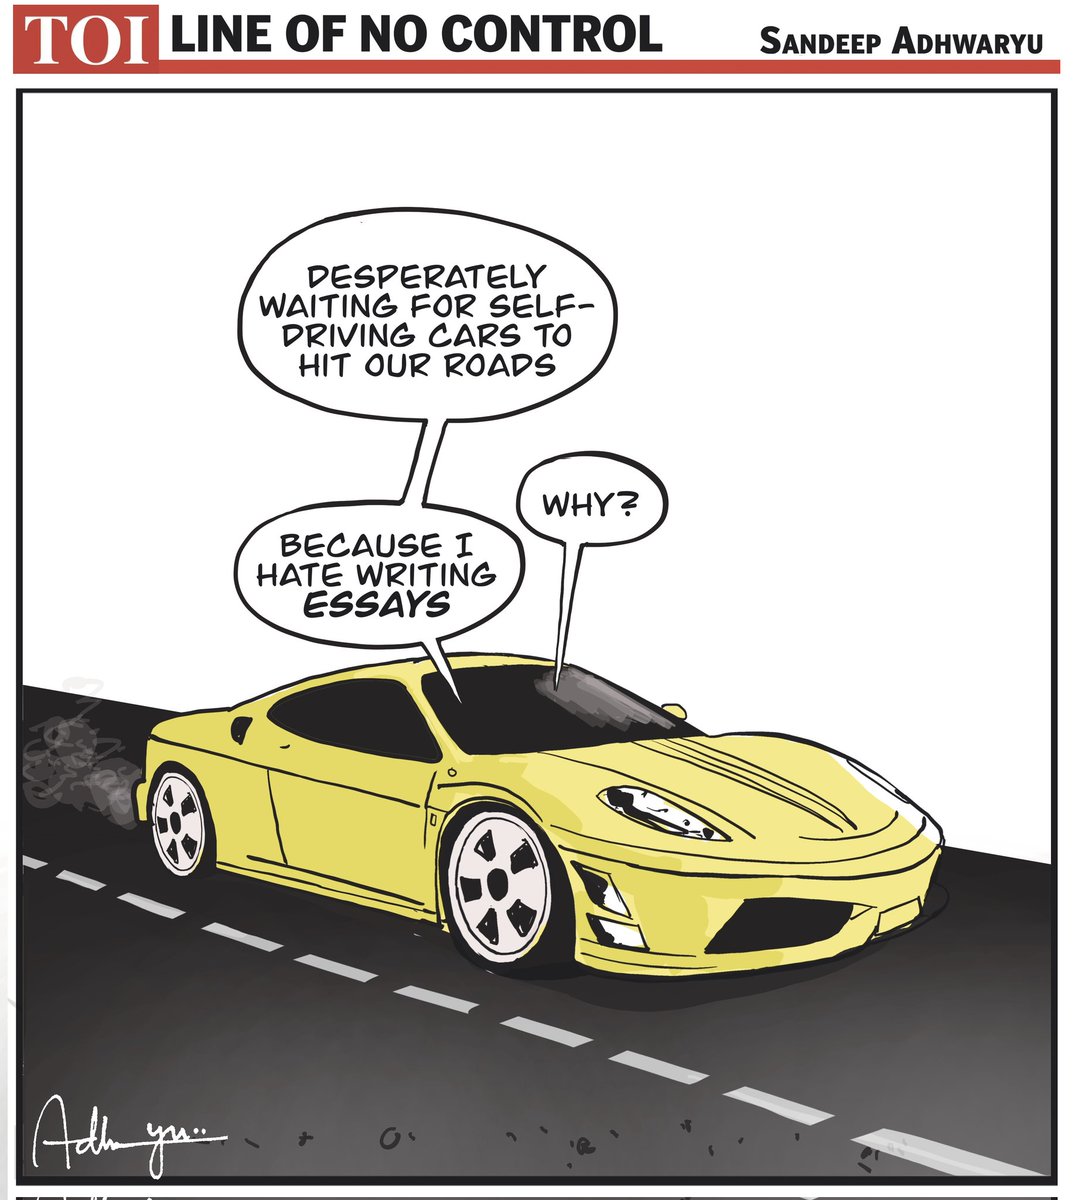 #Pune #Porsche @timesofindia